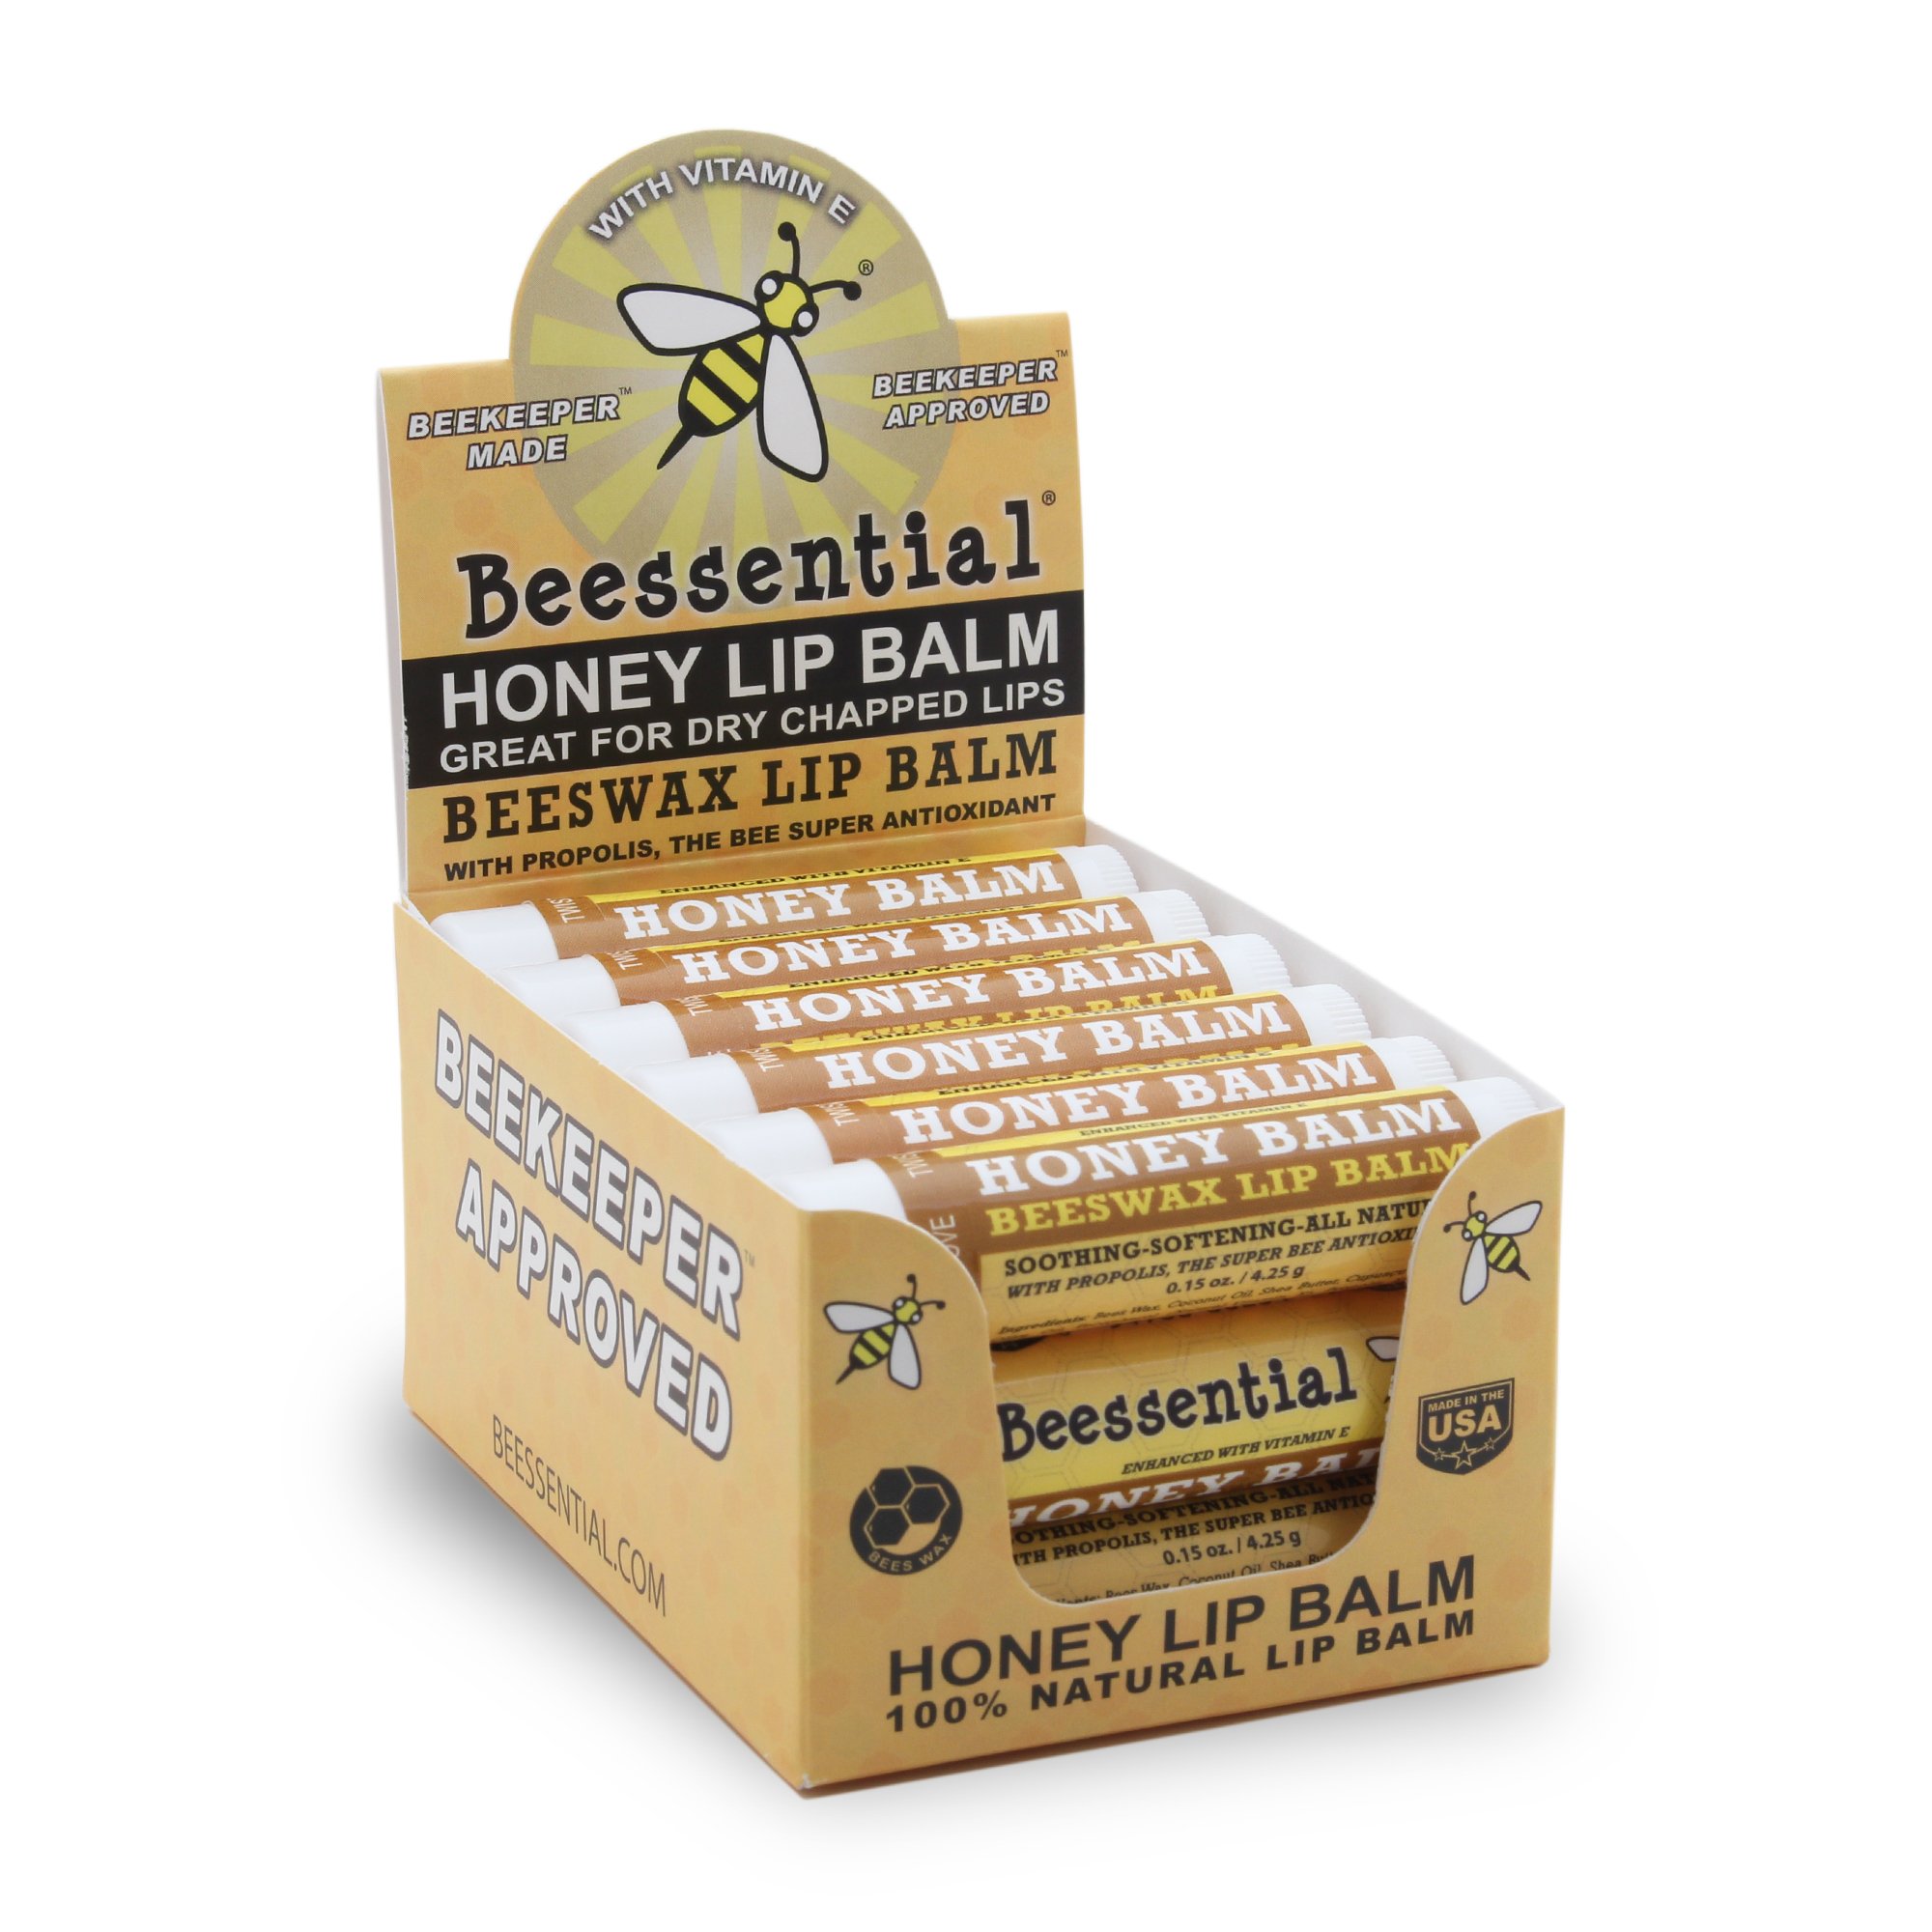 Honey Beeswax Lip Balm - Beekeeper Made & Beekeeper Approved